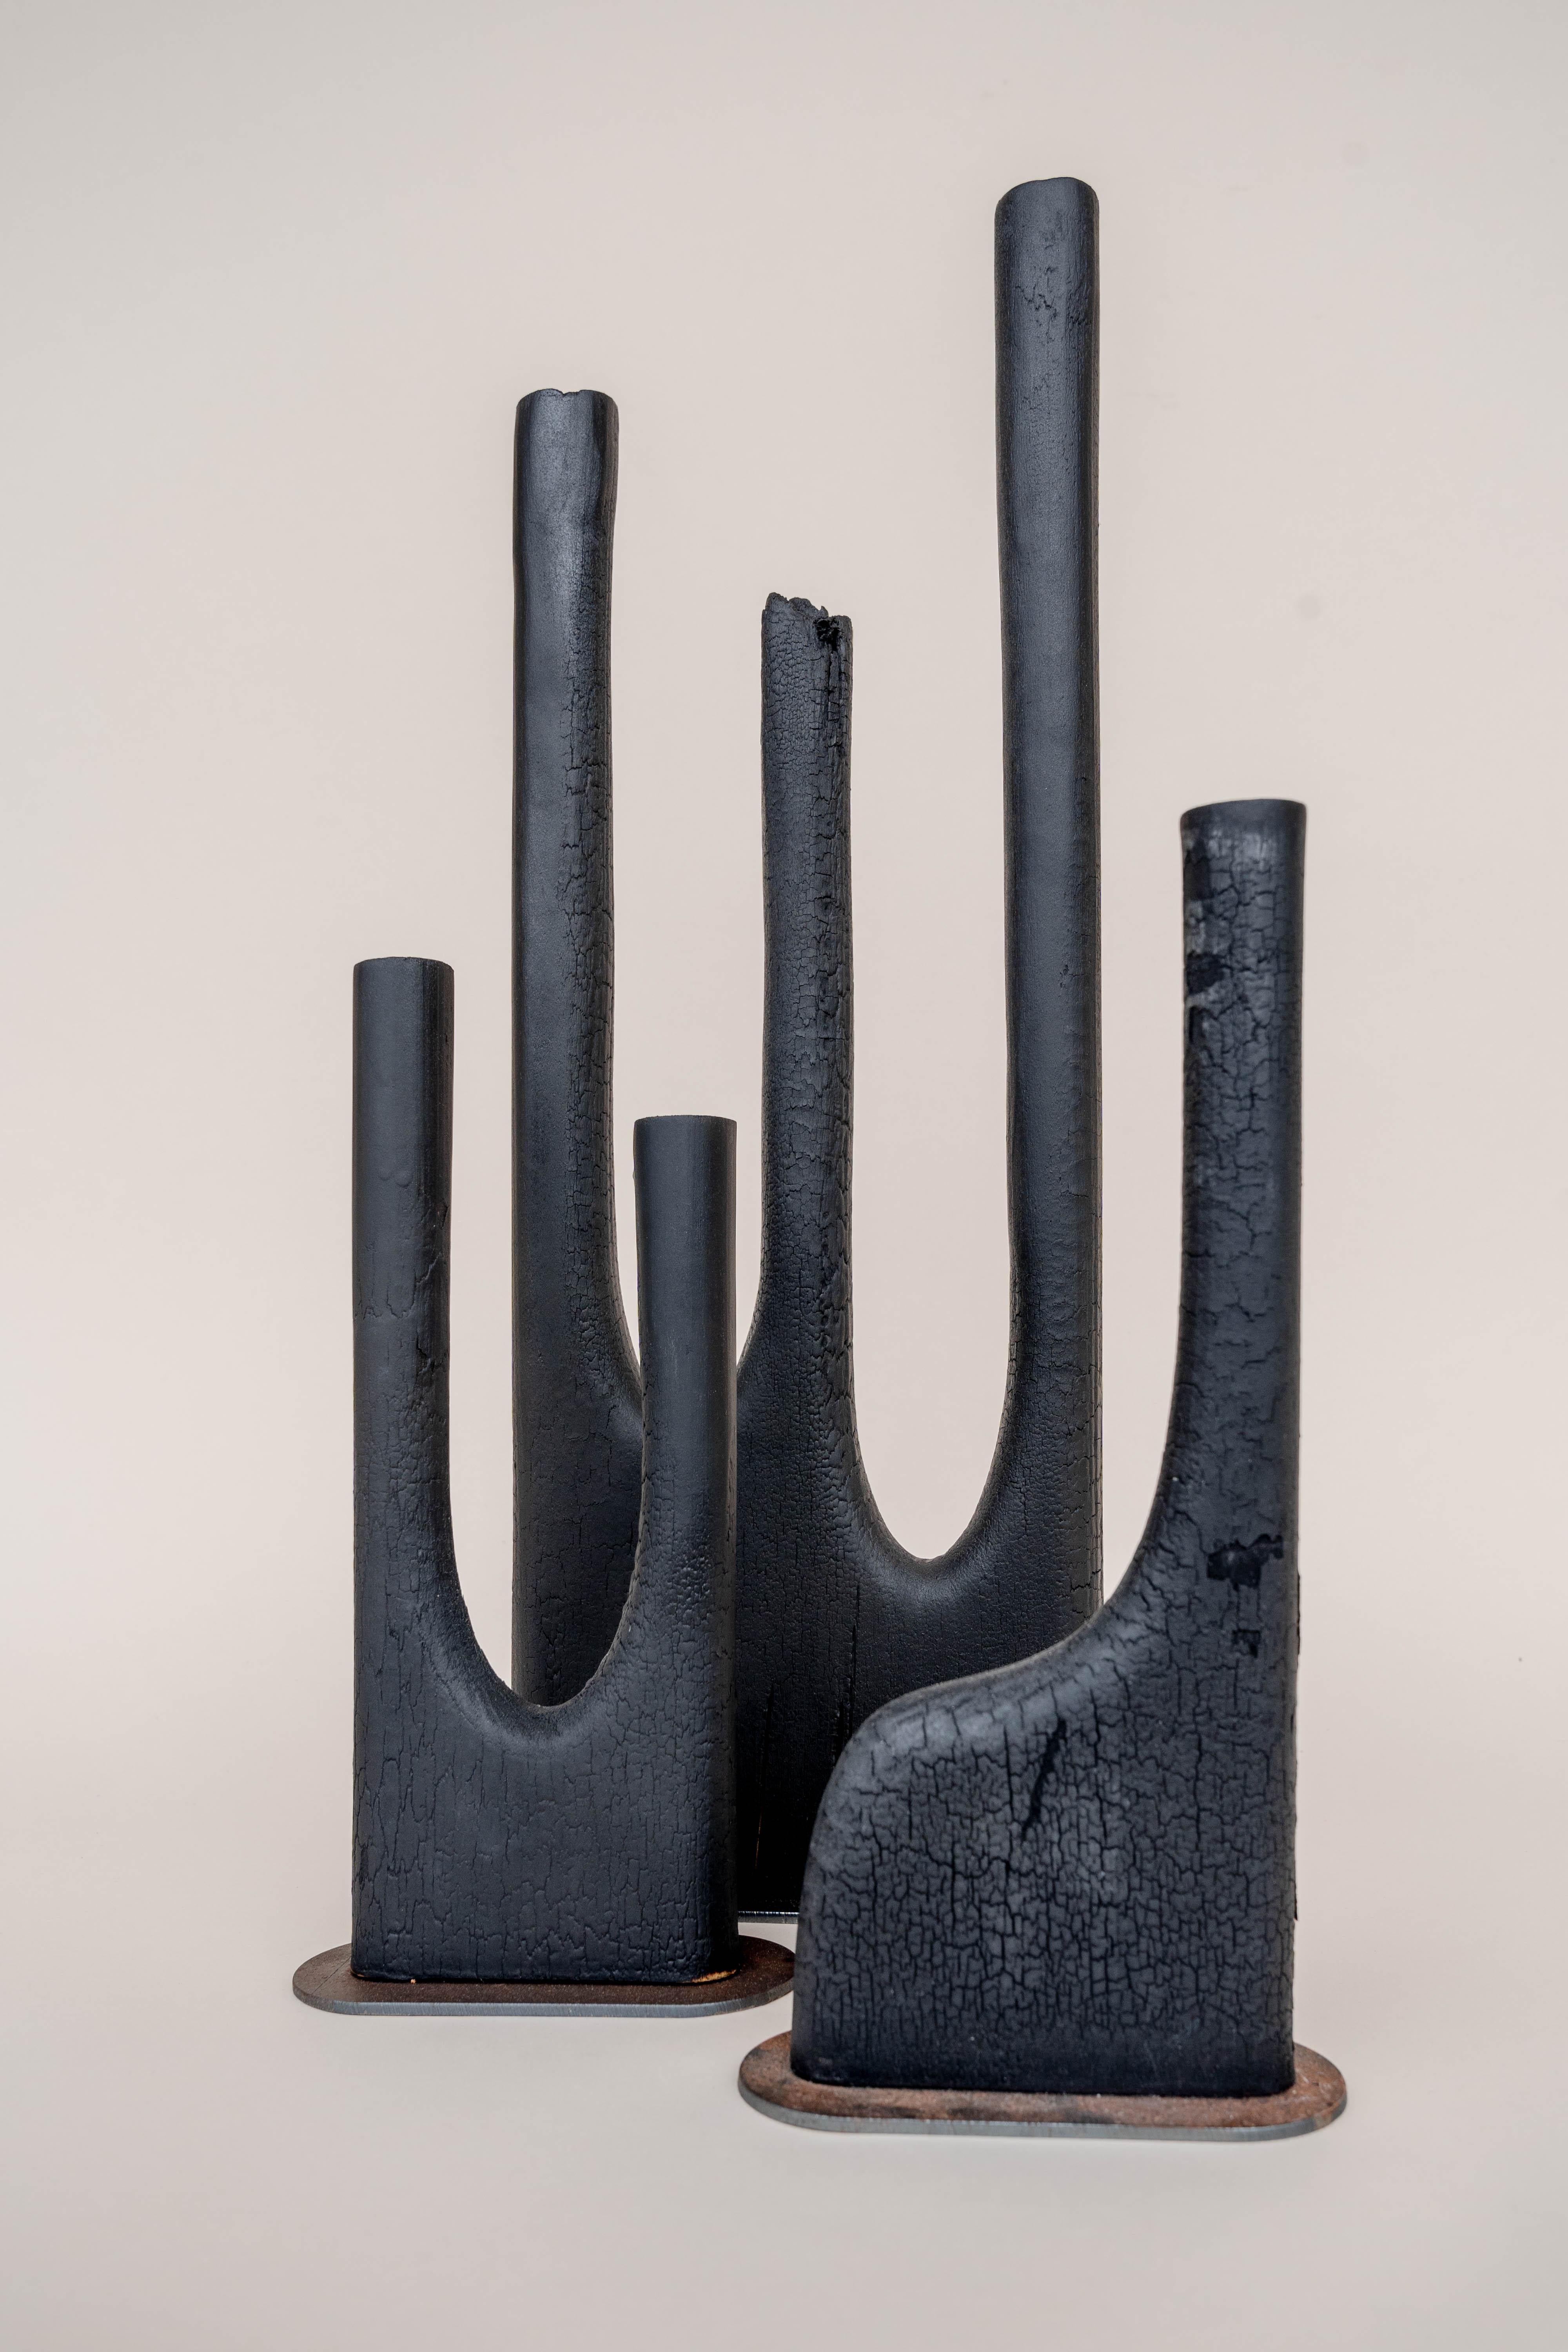 Other Trio Vase by Daniel Elkayam For Sale